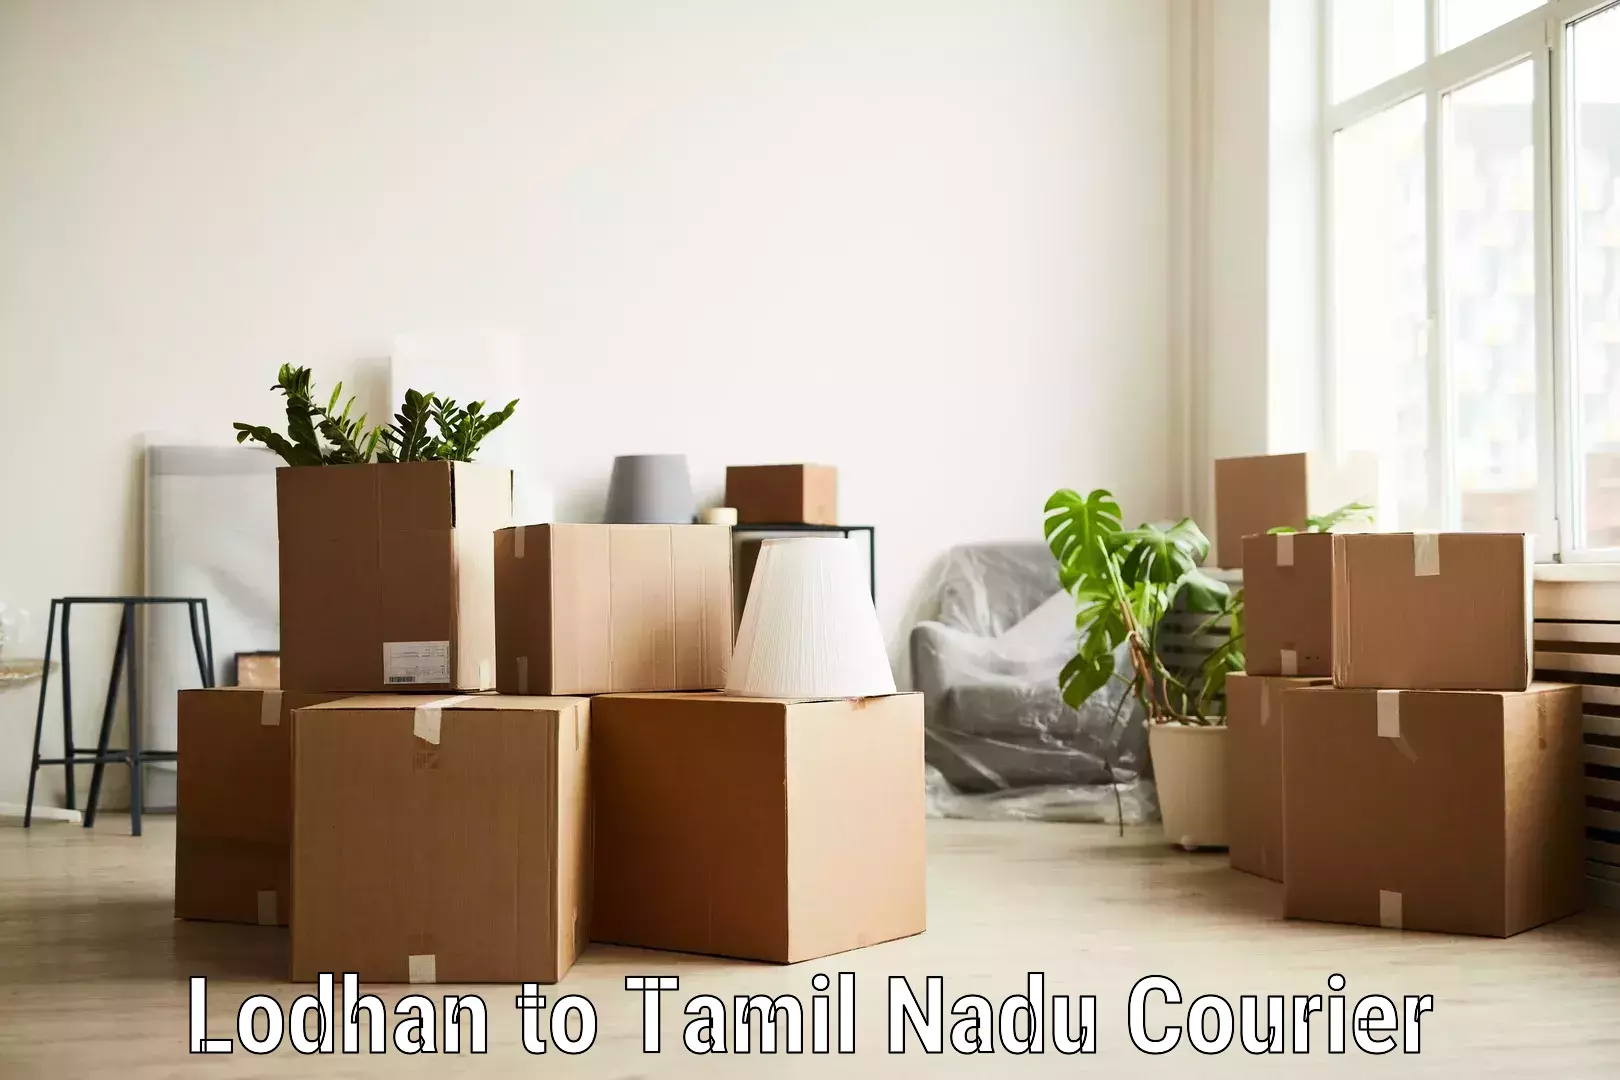 International shipping in Lodhan to Tamil Nadu